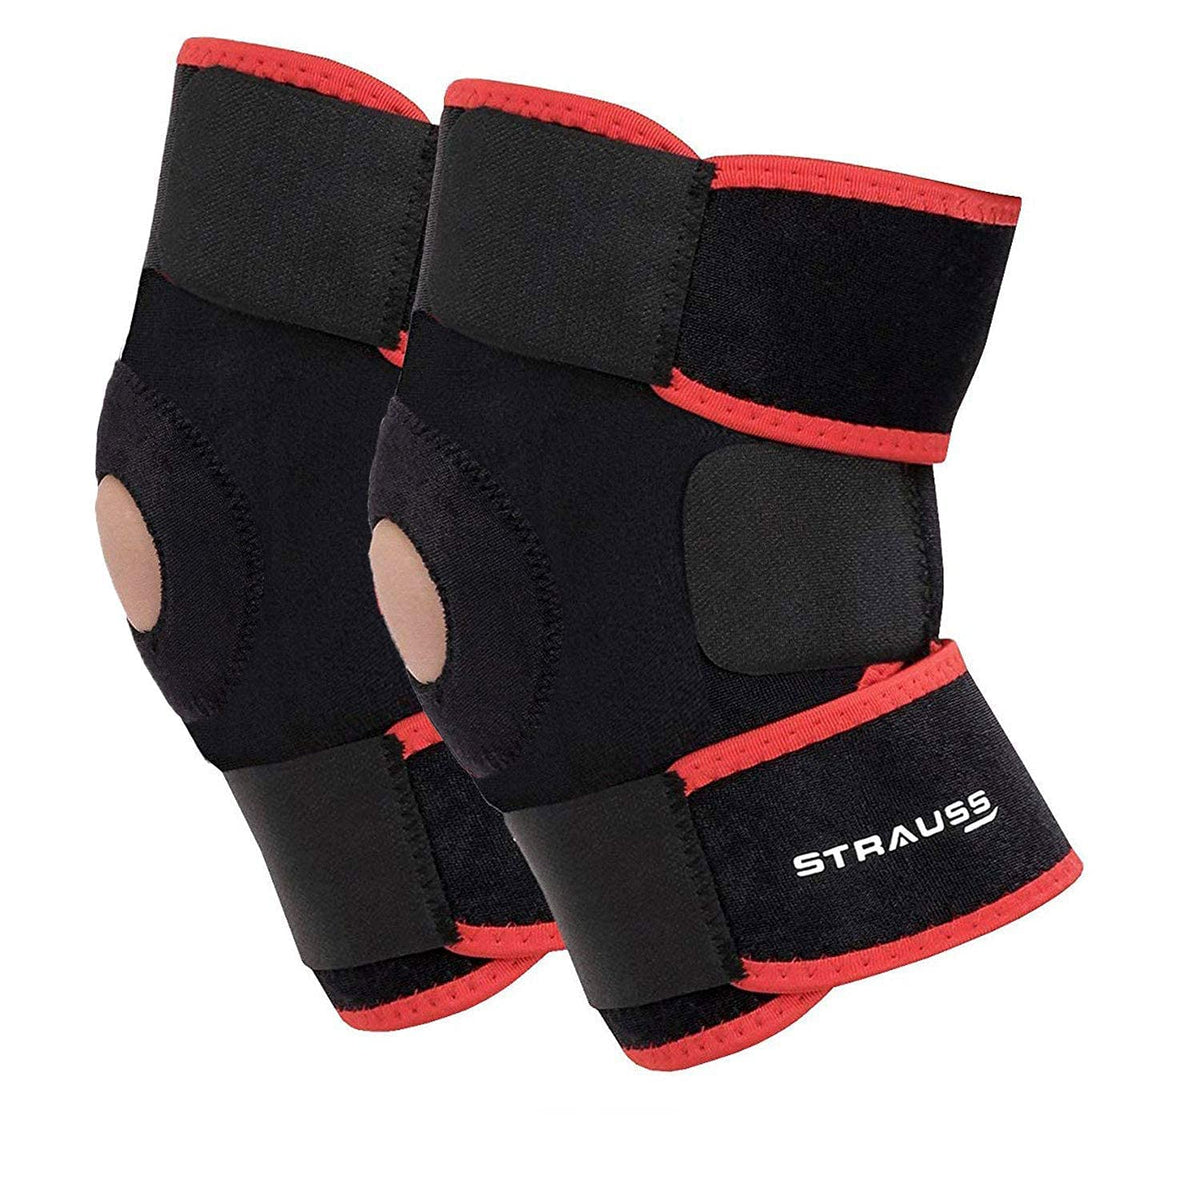 STRAUSS Adjustable Knee Support Patella, Free Size (Black/Red), Pair